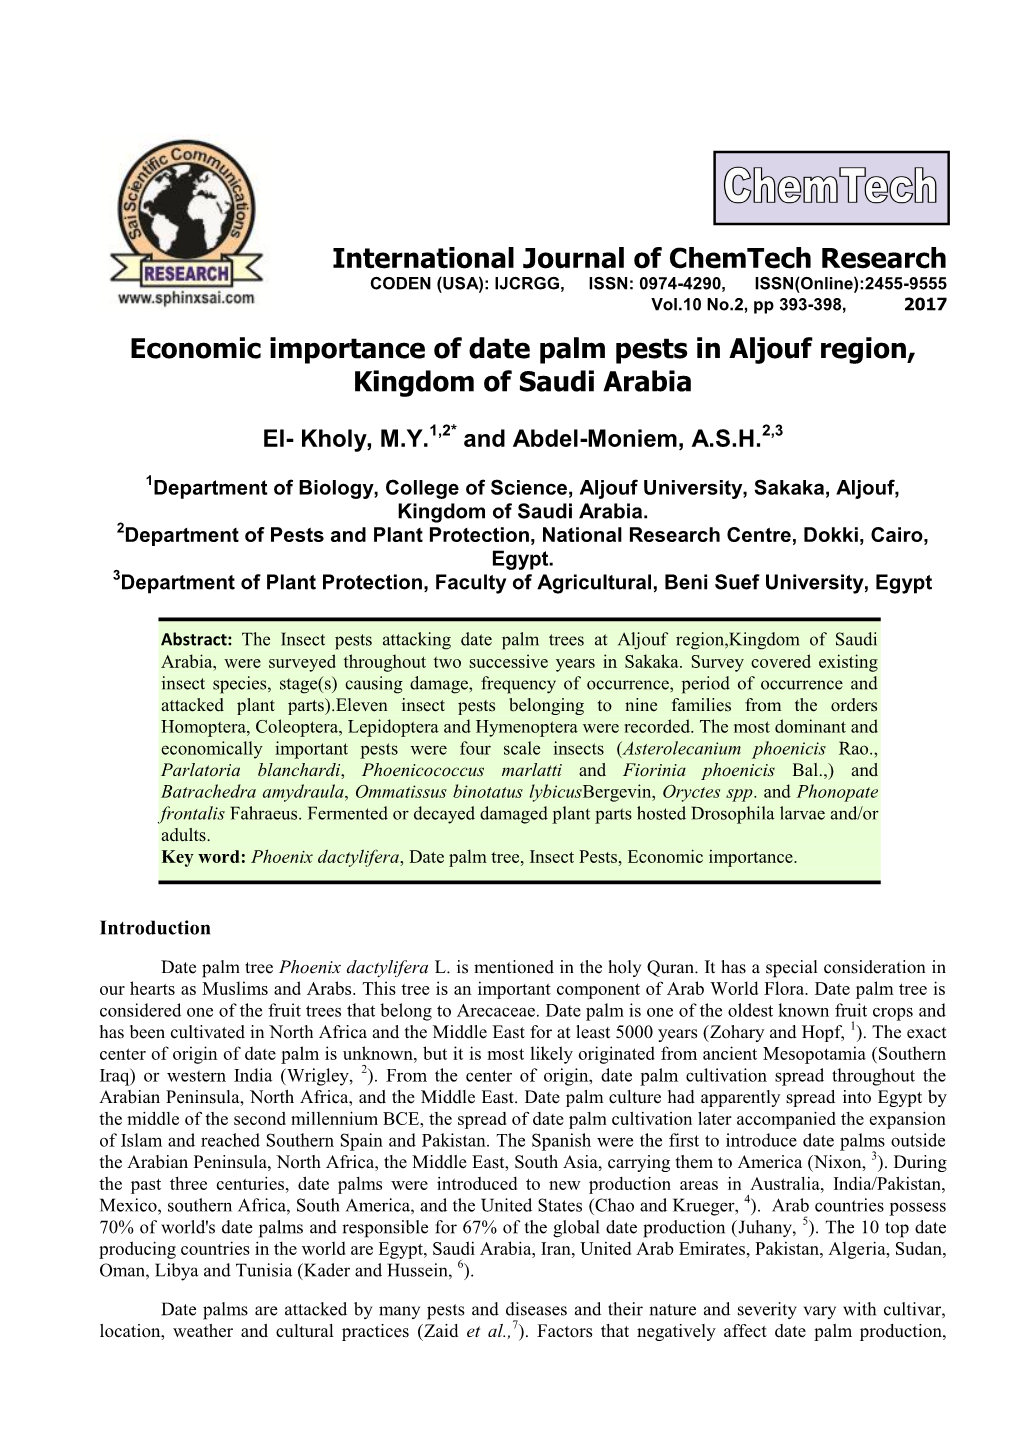 Economic Importance of Date Palm Pests in Aljouf Region, Kingdom of Saudi Arabia